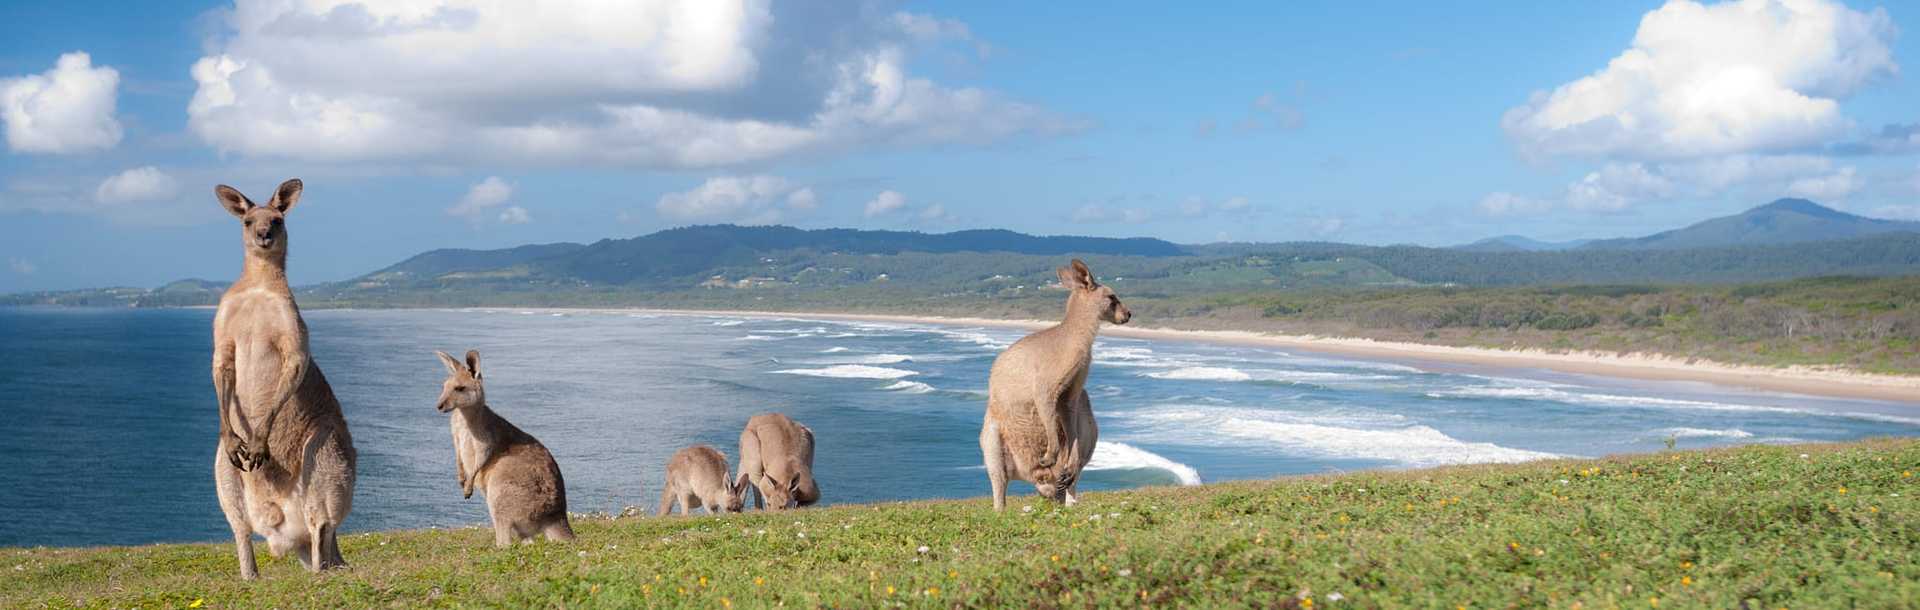 Kangaroos near Emerald Beach in Australia